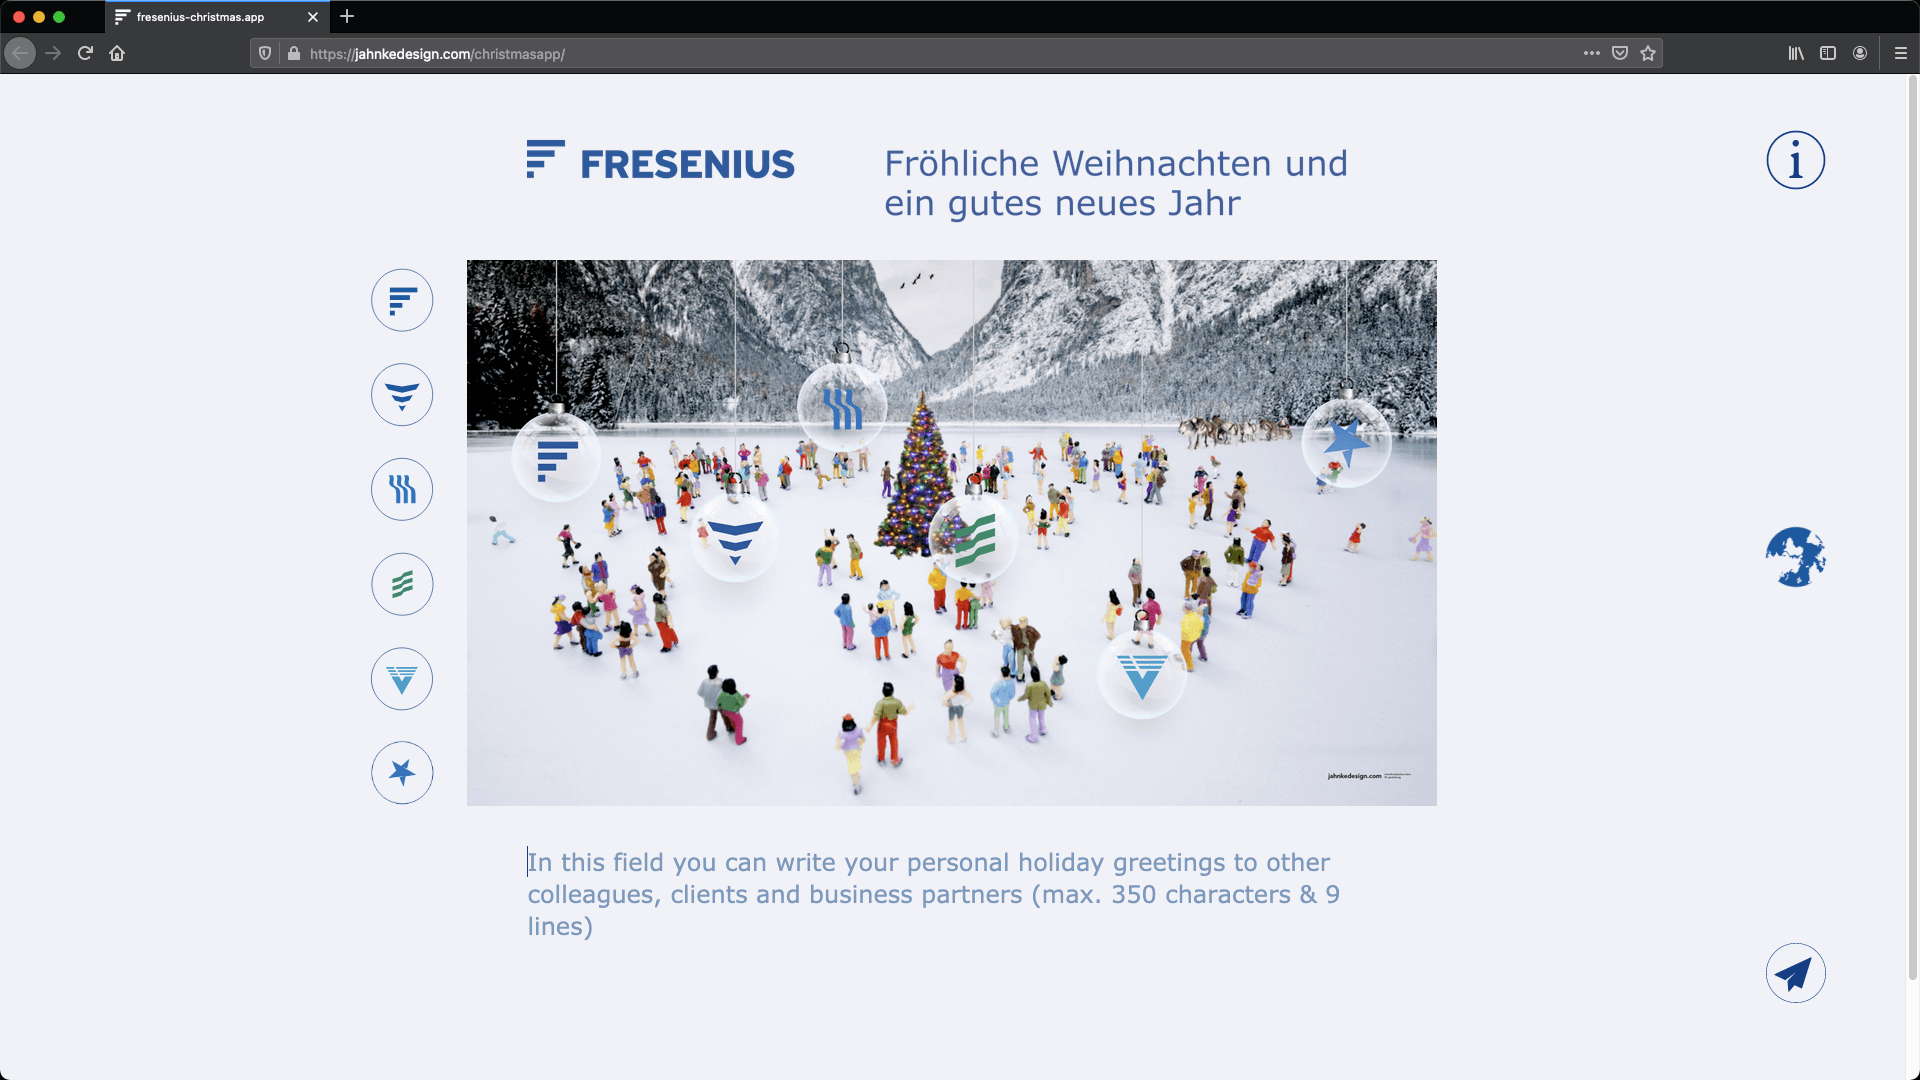 fresenius christmas app 2020 | entwicklung & design — lutz jahnke | jahnkedesign.com